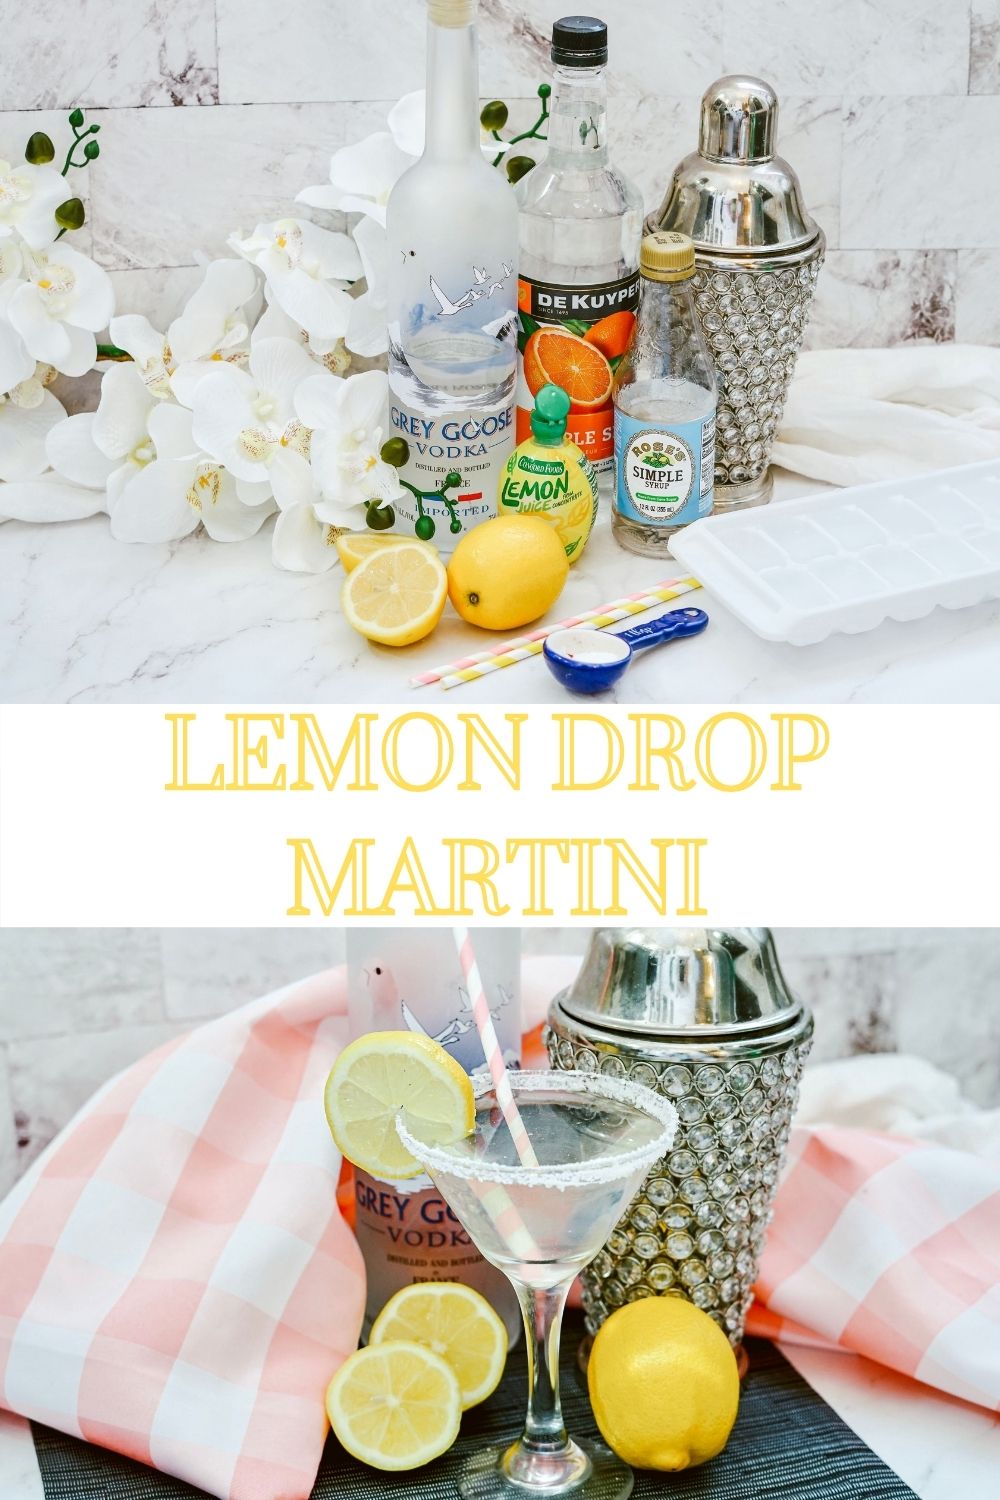 lemon drop martini ingredients and finished photo